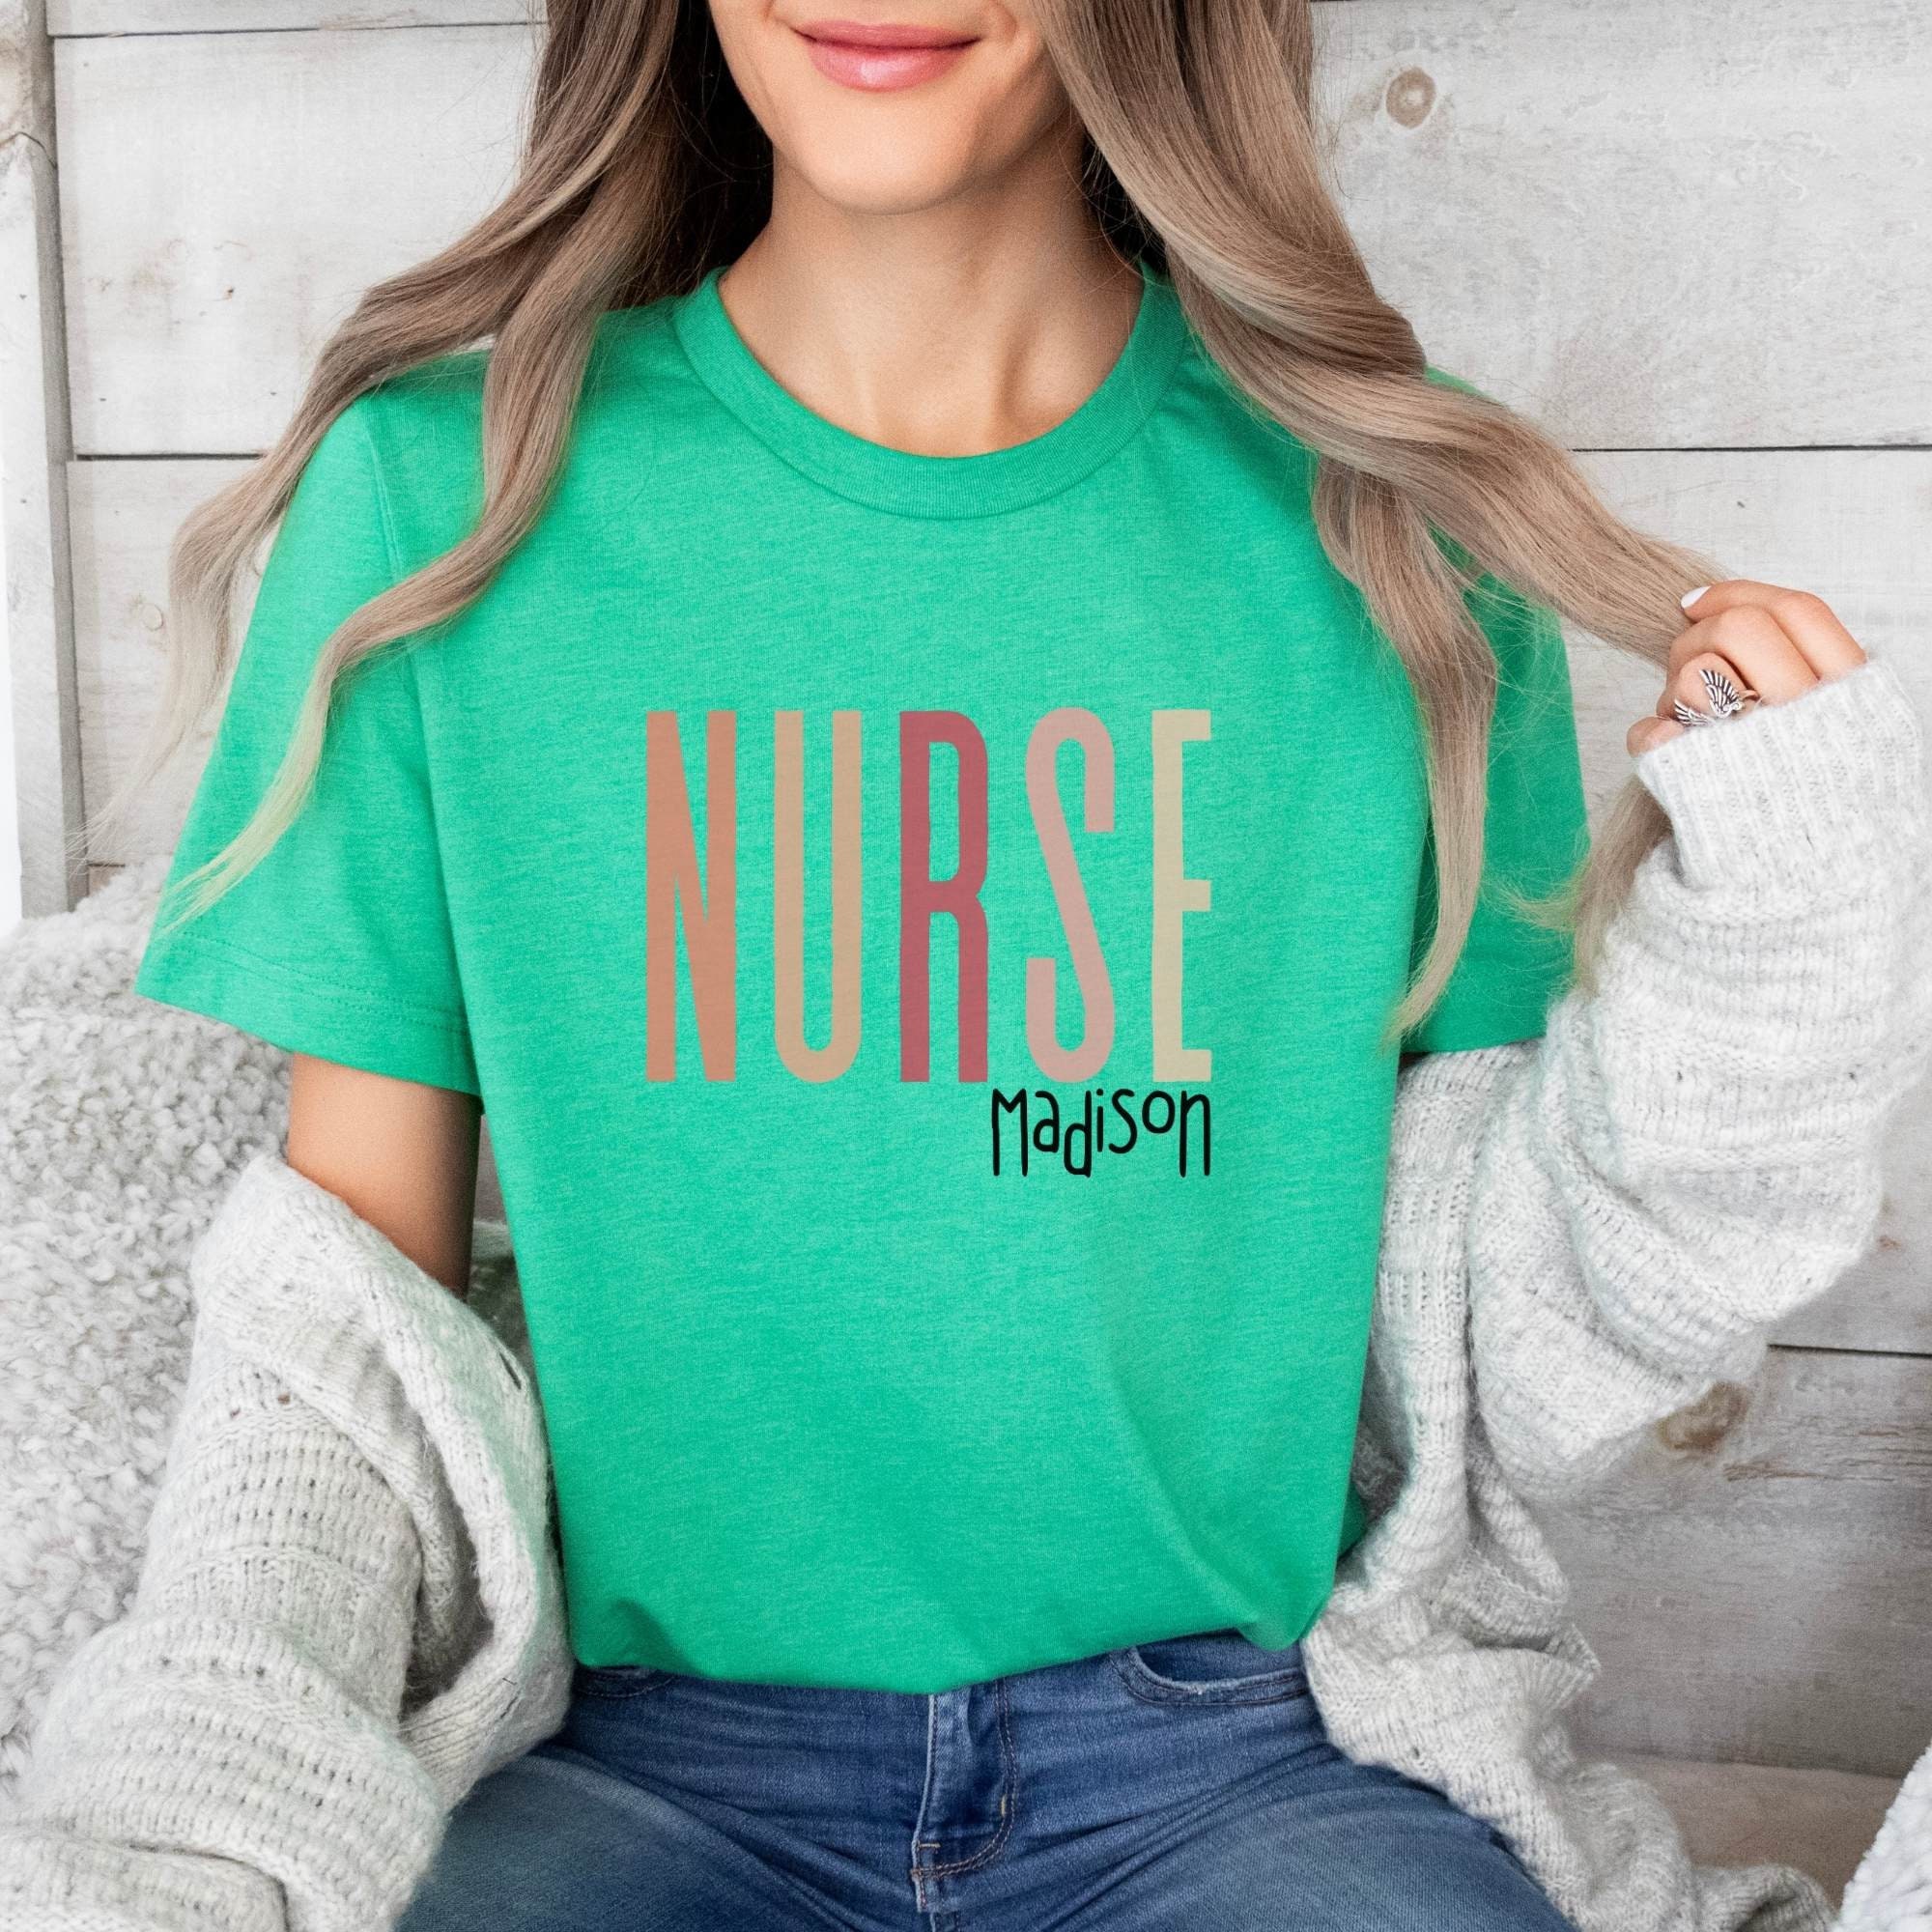 Custom Nurse T-shirt, Personalized Name Nurse Shirt